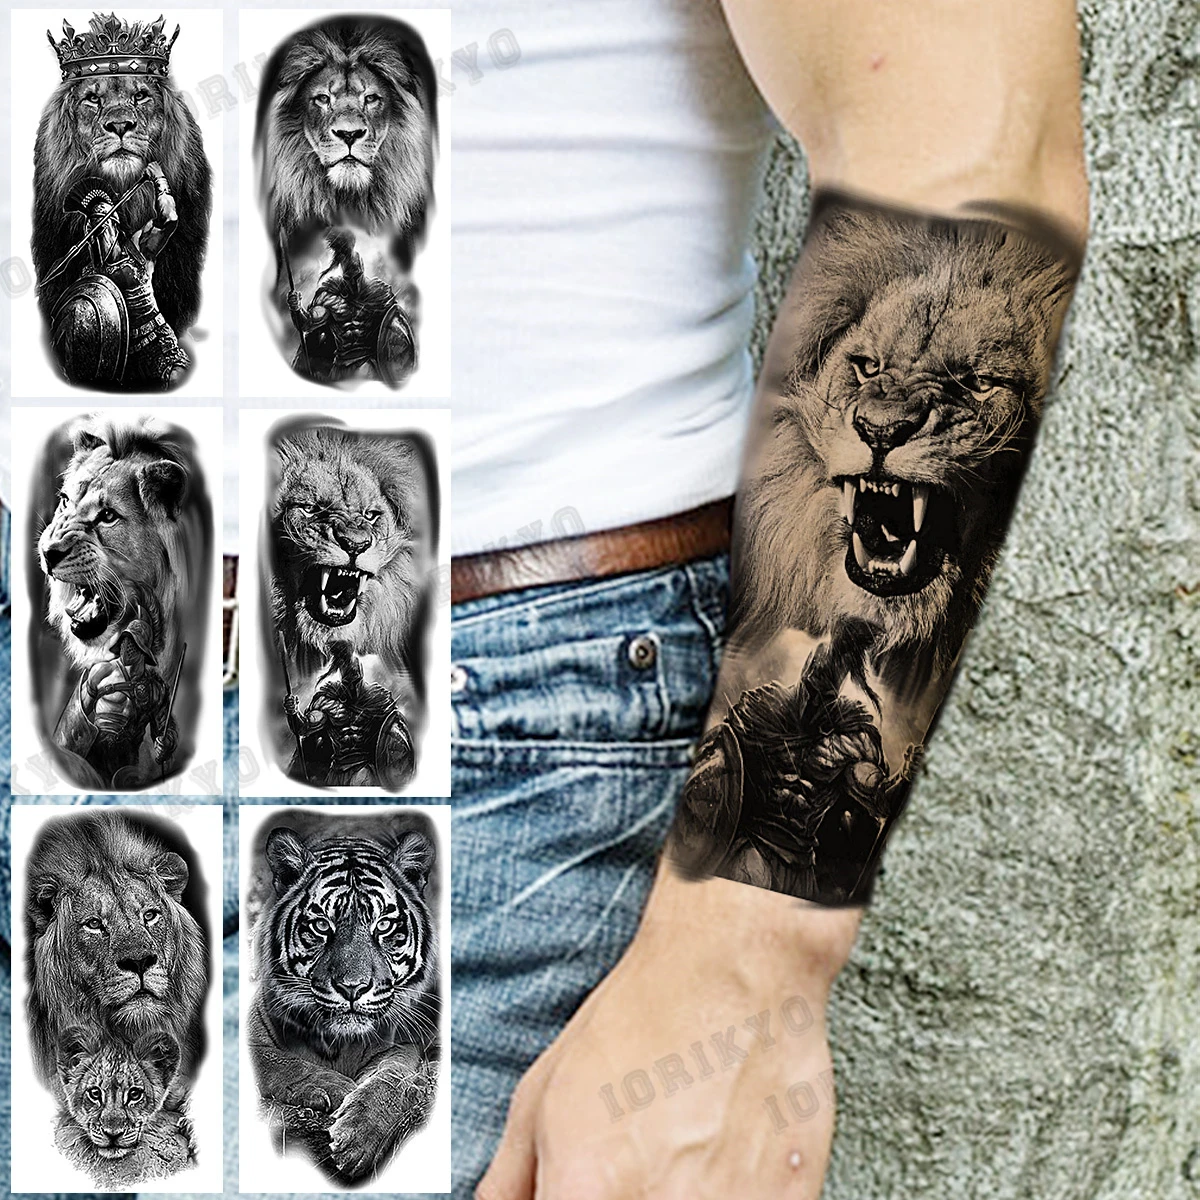 3d Lion Warrior Forearm Temporary Tattoos For Men Adult Tiger Crown Fake  Tattoo Waterproof Body Art Decoration Tatoos Sticker - Temporary Tattoos -  AliExpress